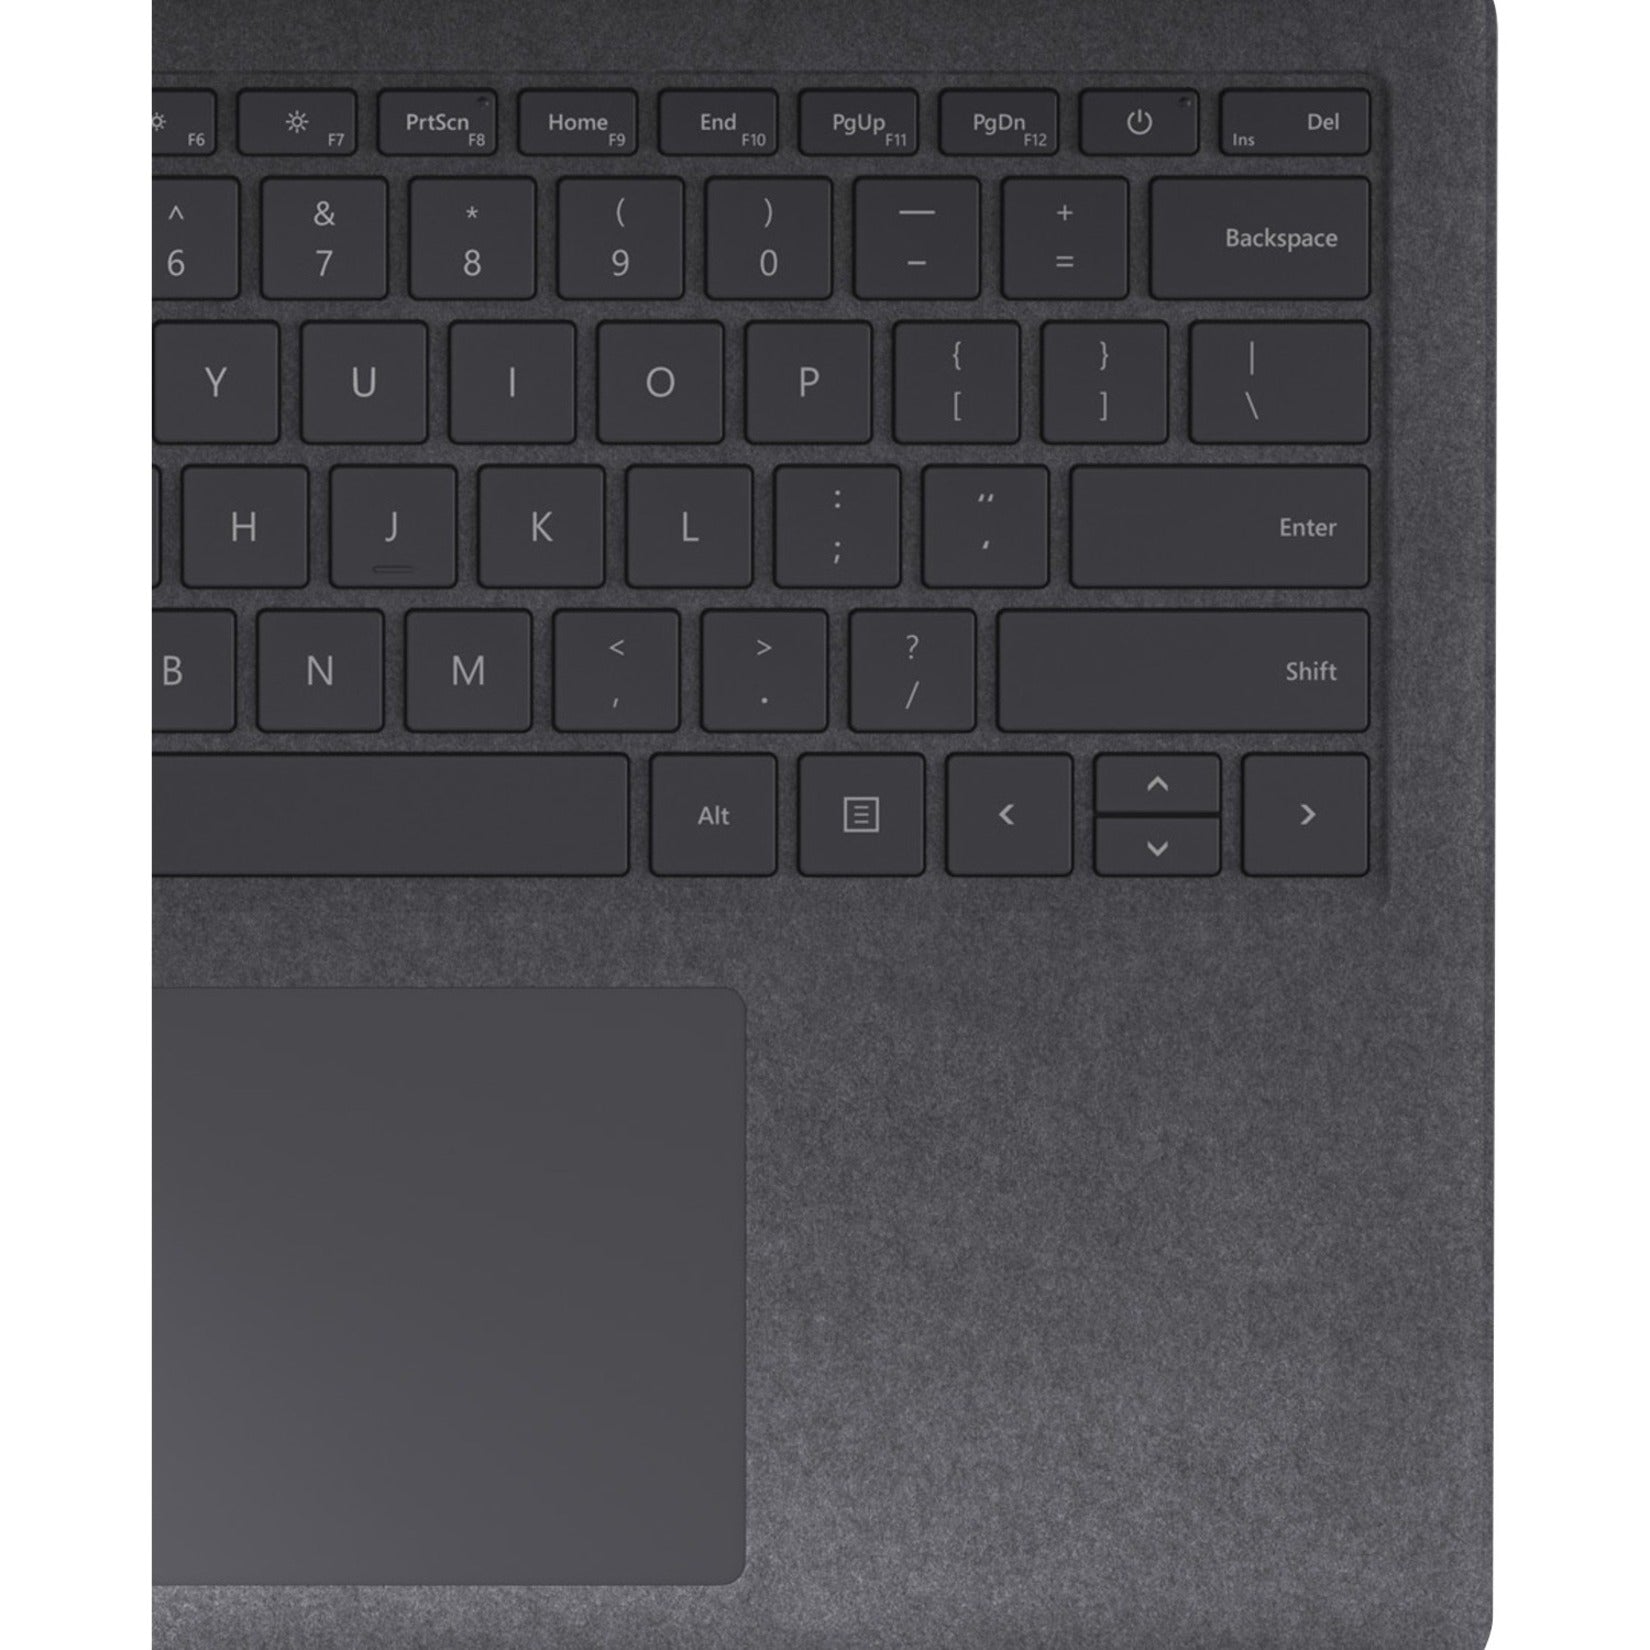 Microsoft 5F1-00035 Surface Laptop 4 Notebook, 13.5" Touchscreen, Core i7, 16GB RAM, 512GB SSD, Windows 10